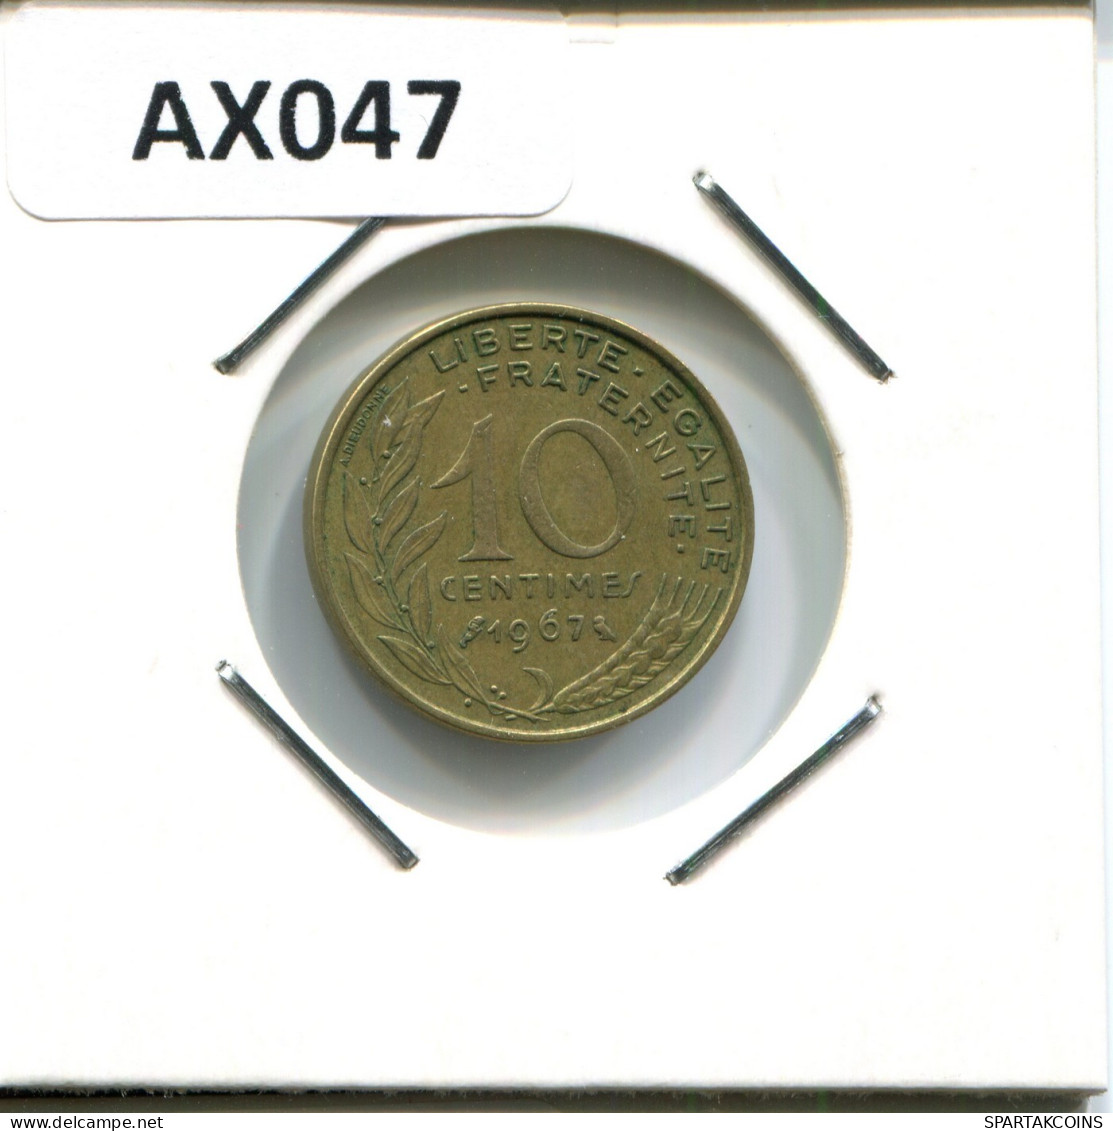 10 CENTIMES 1967 FRANCE Coin #AX047.U.A - 10 Centimes